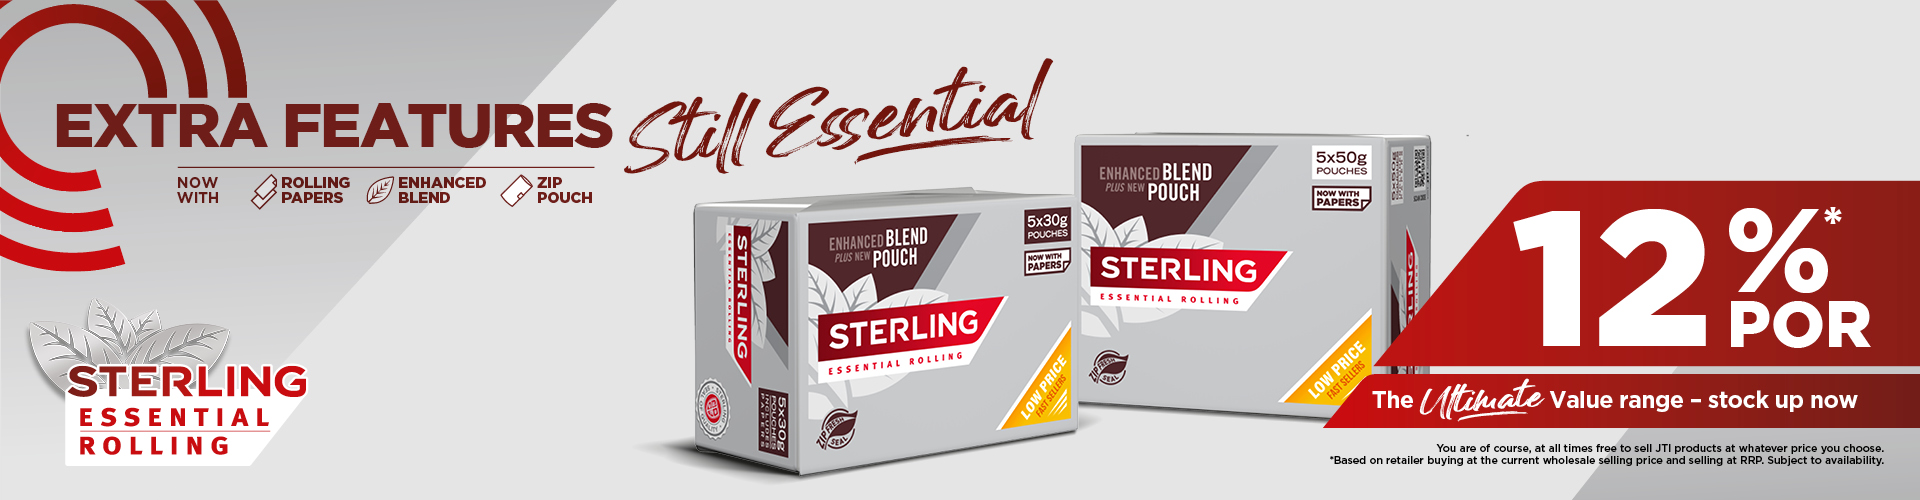 Sterling Essential Rolling Tobacco 12% POR